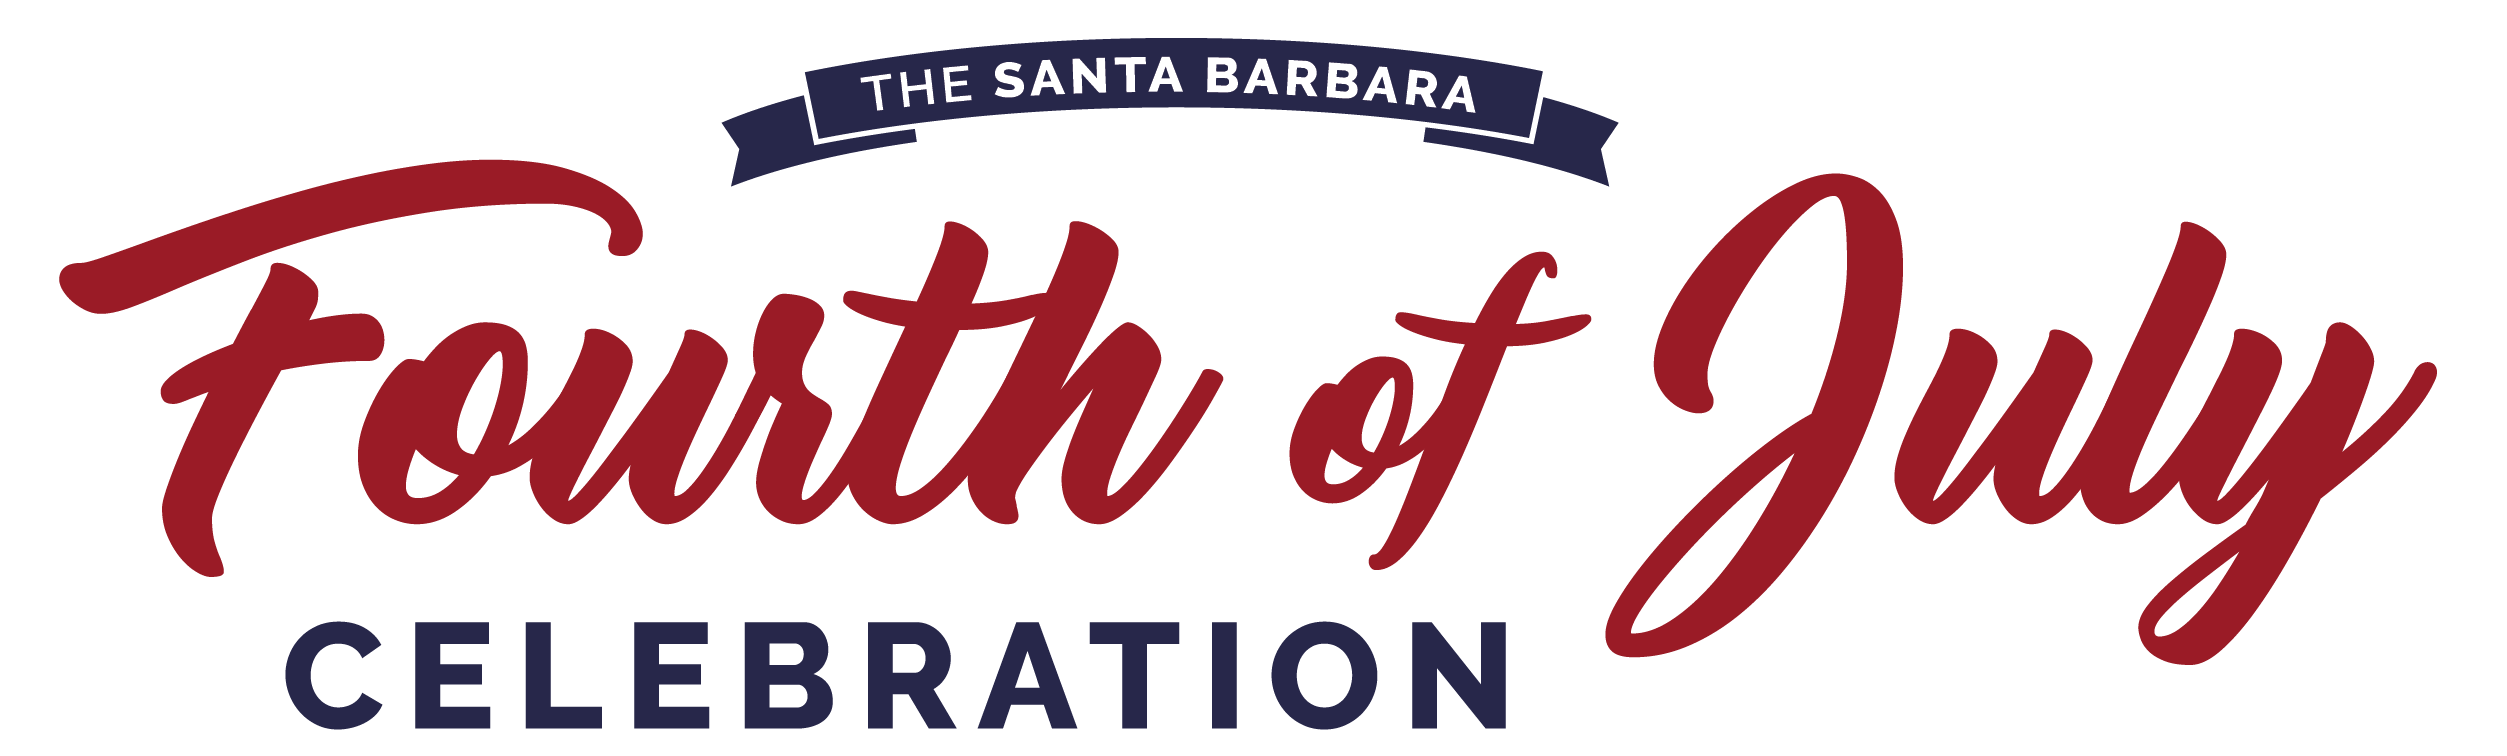 July Logo - Santa Barbara of July in Santa Barbara